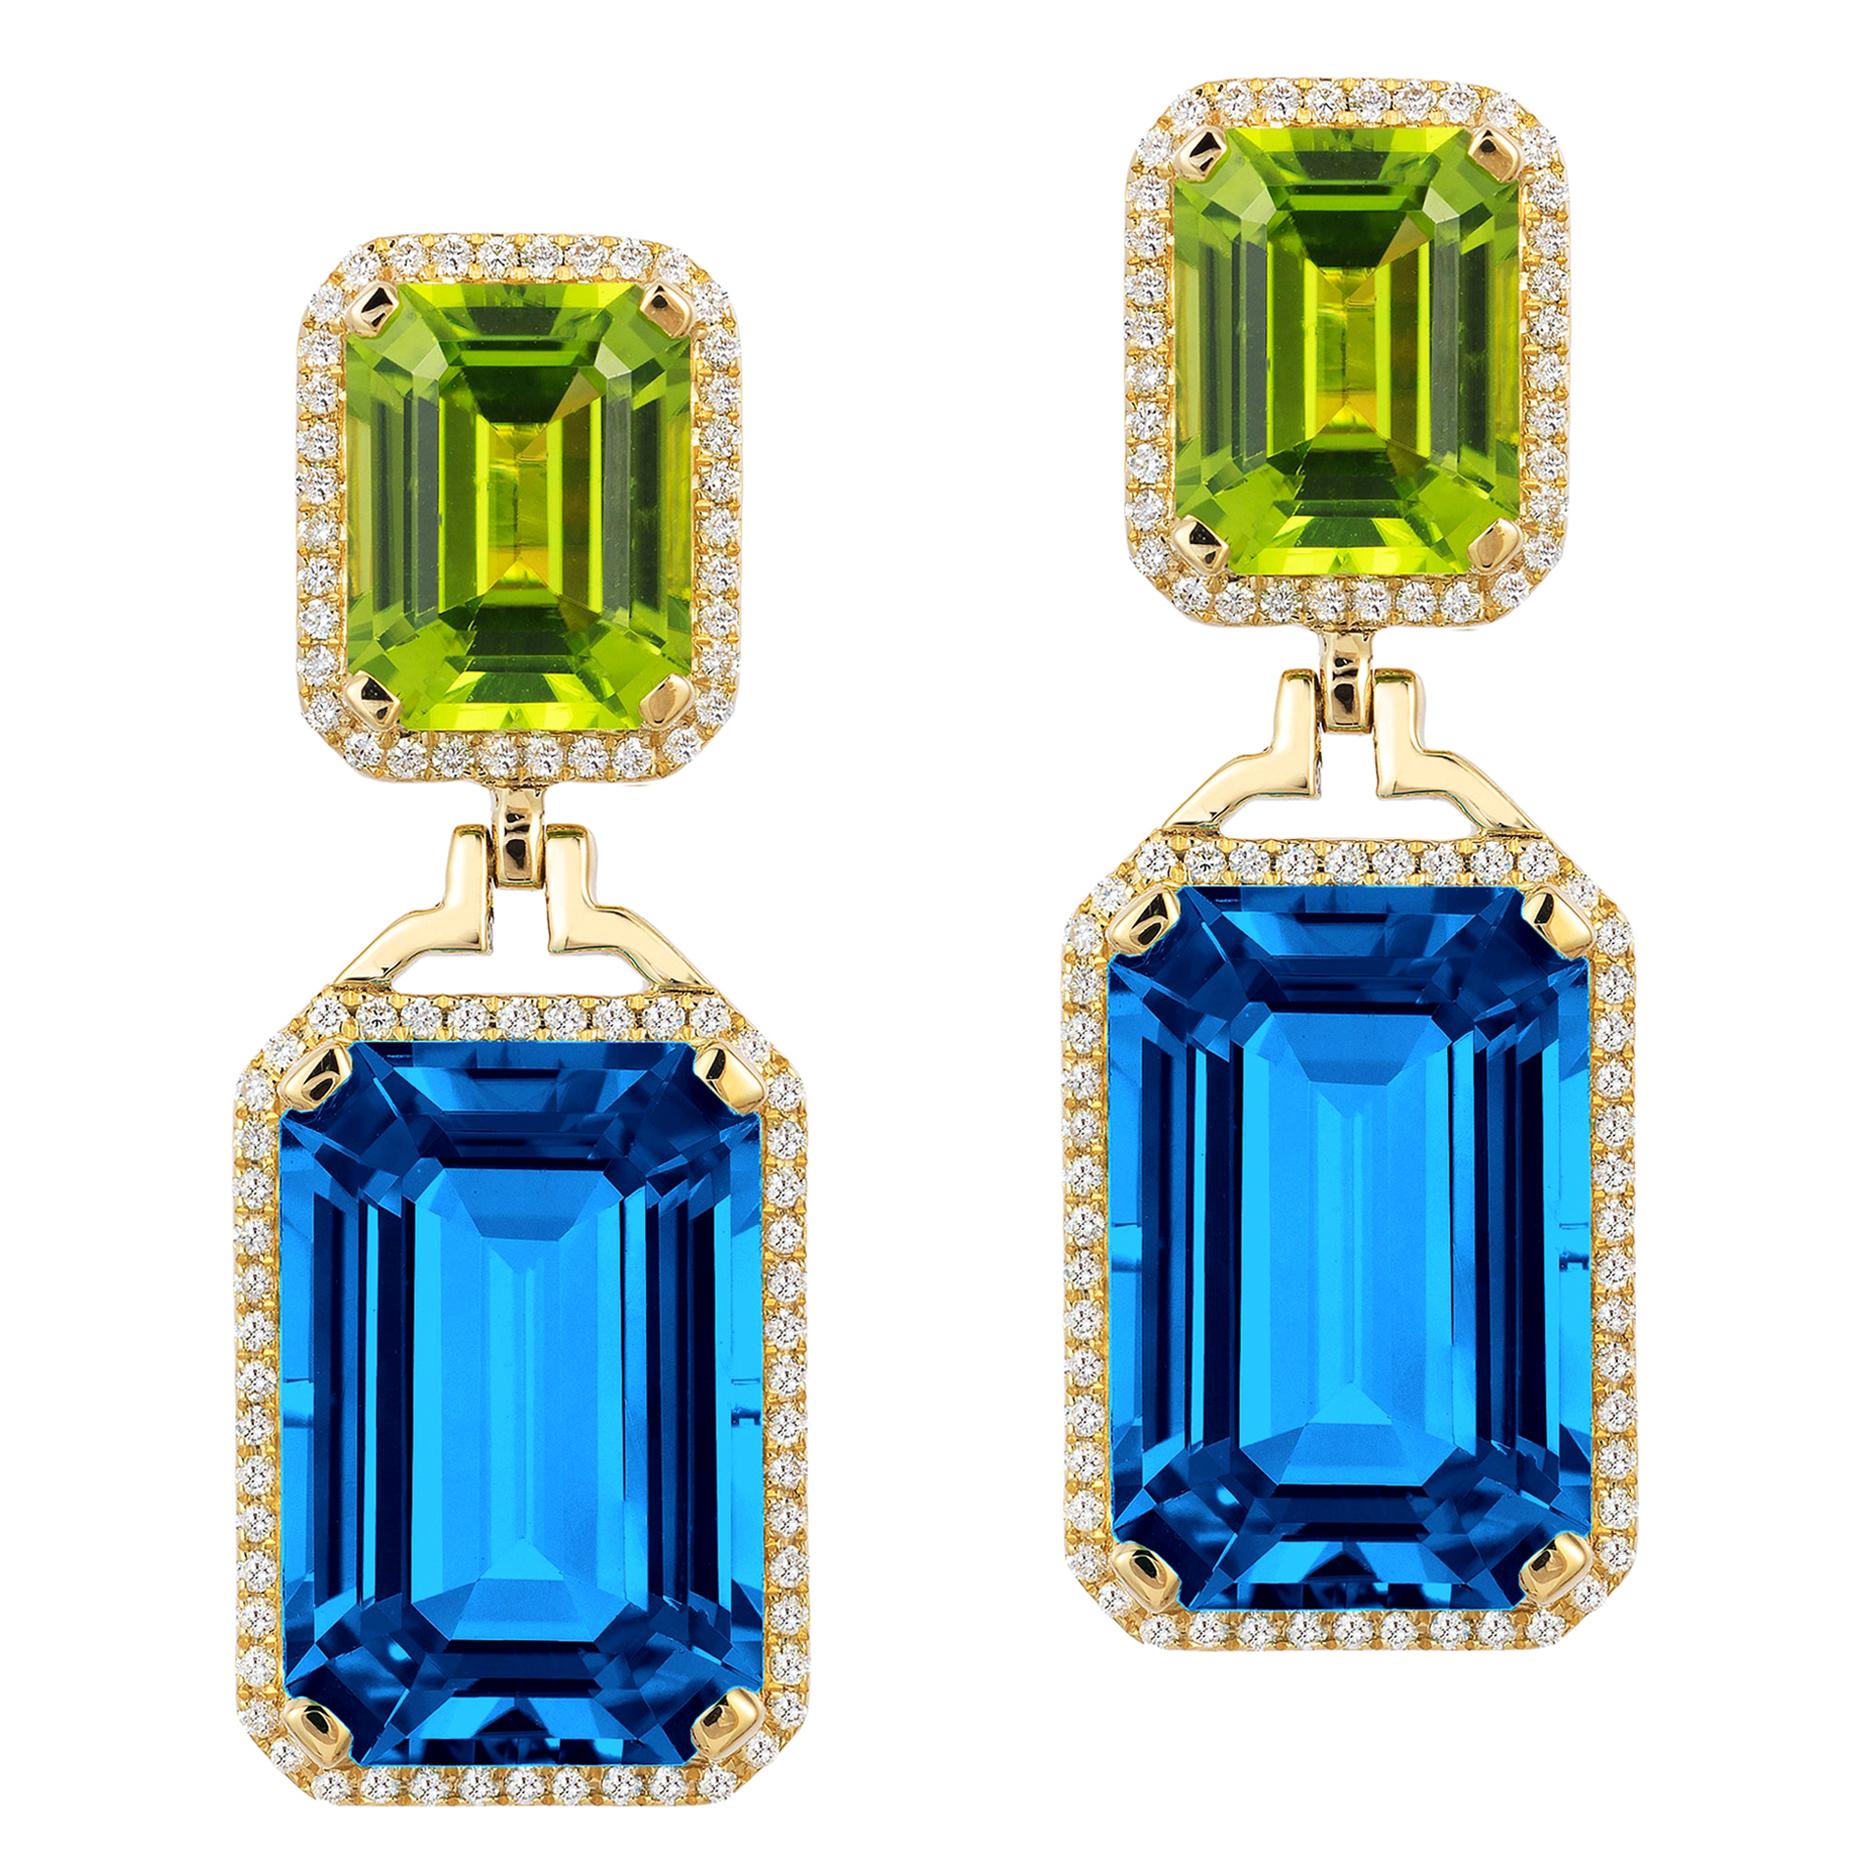 Goshwara London Blue Topaz Emerald Cut and Peridot with Diamonds Earrings For Sale